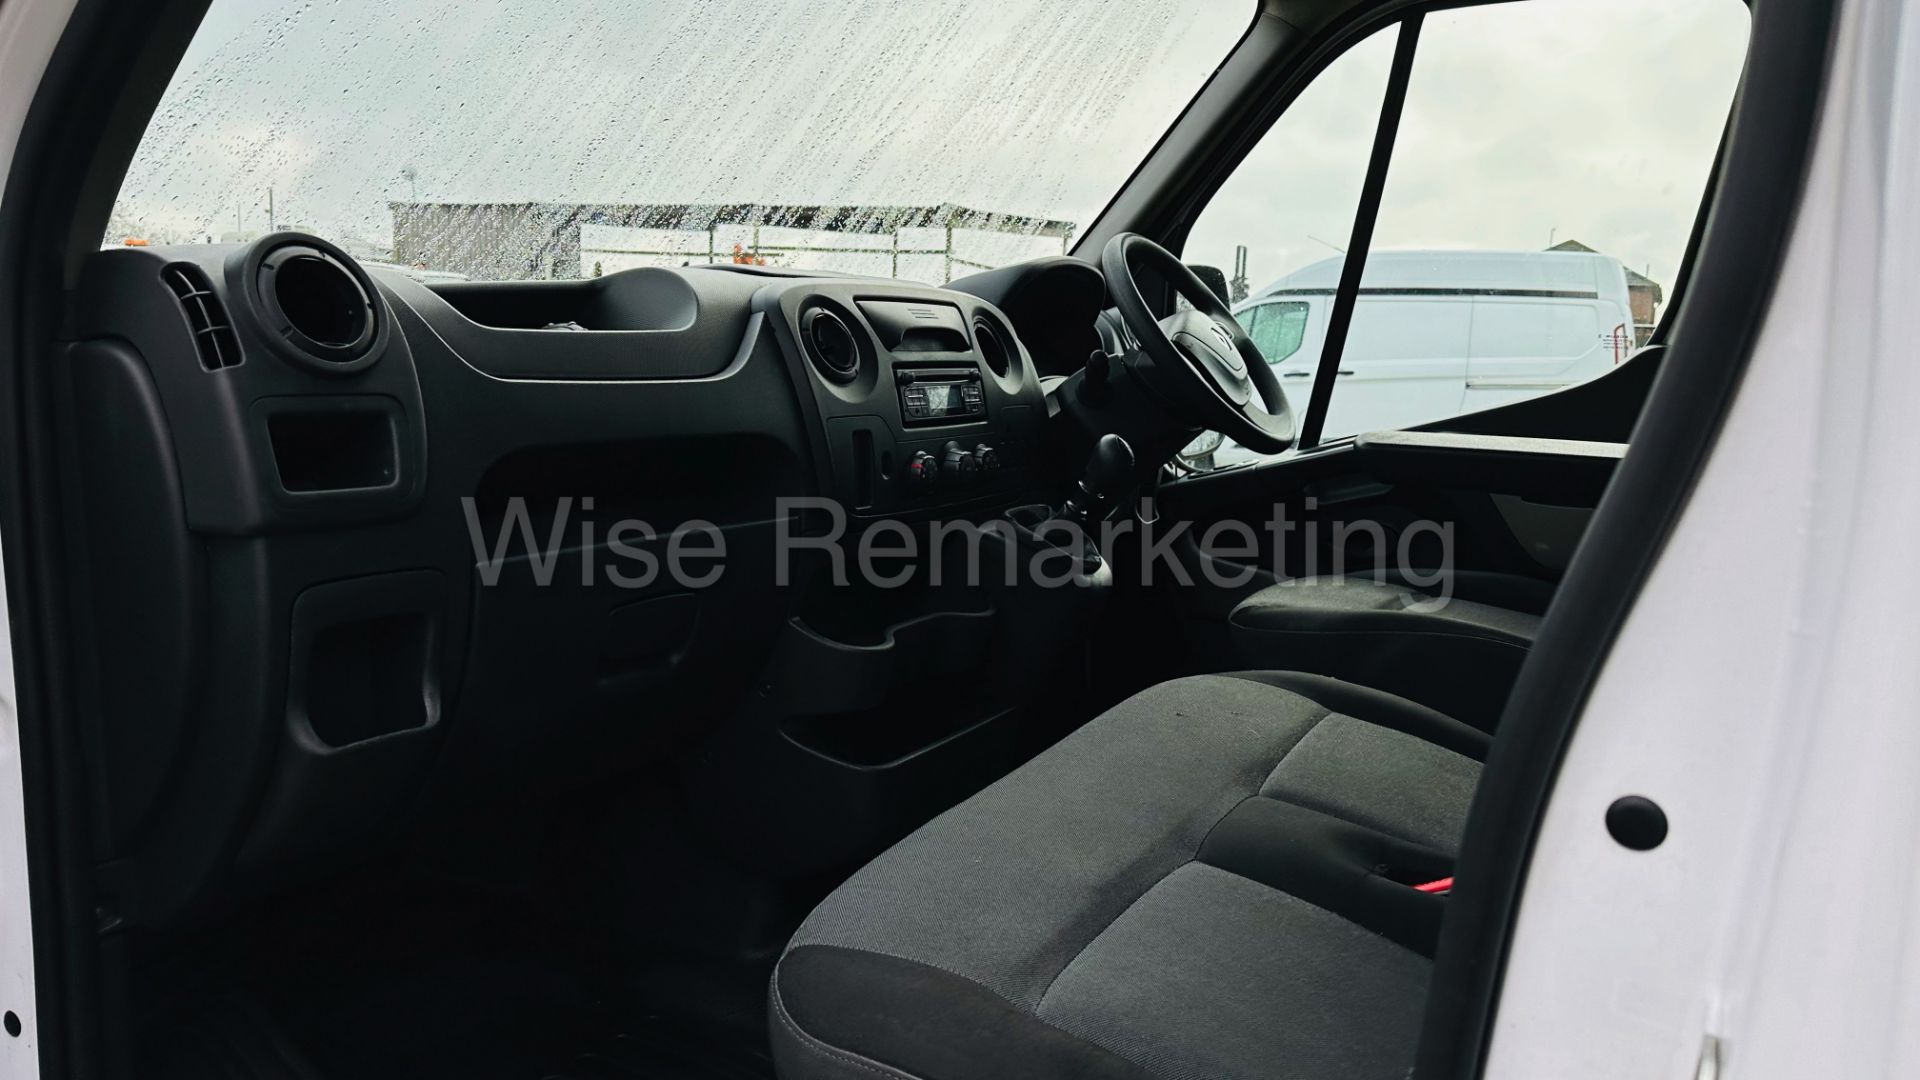 Renault Master 2.3 Dci *LWB Low Loader / Luton Box* (2019) Euro 6 / U-LEZ Compliant (3500 kg) *A/C* - Image 19 of 34